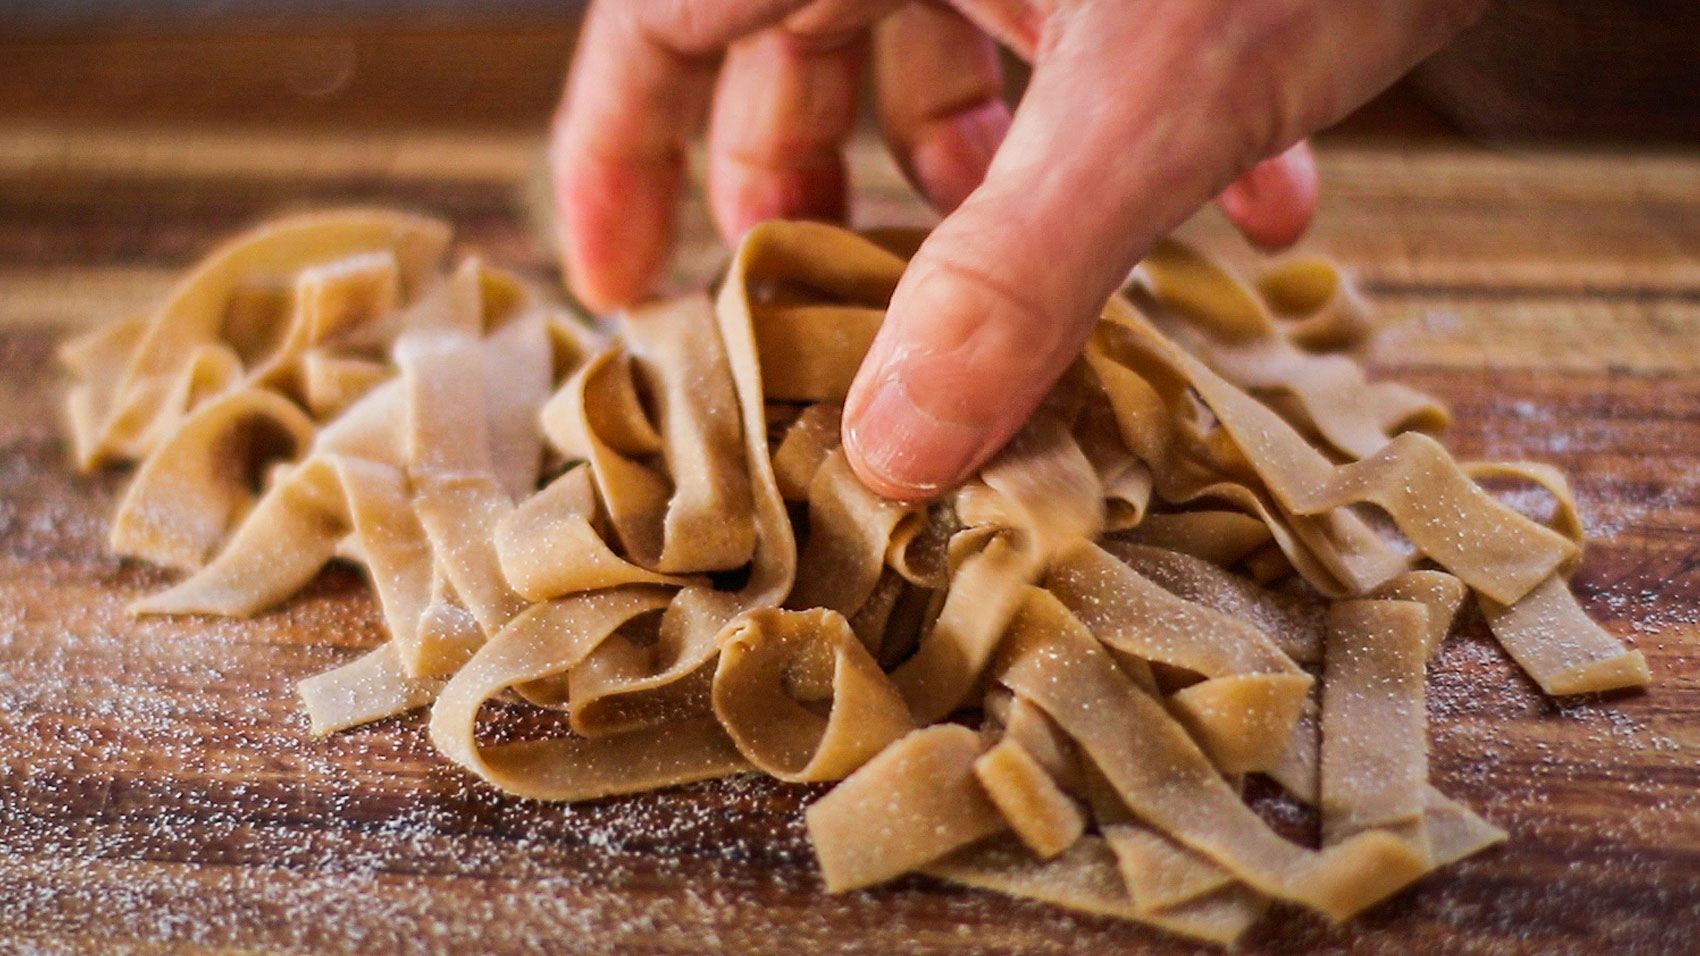 https://recipe30.com/wp-content/uploads/2021/05/Home-made-pasta-papardella.jpg